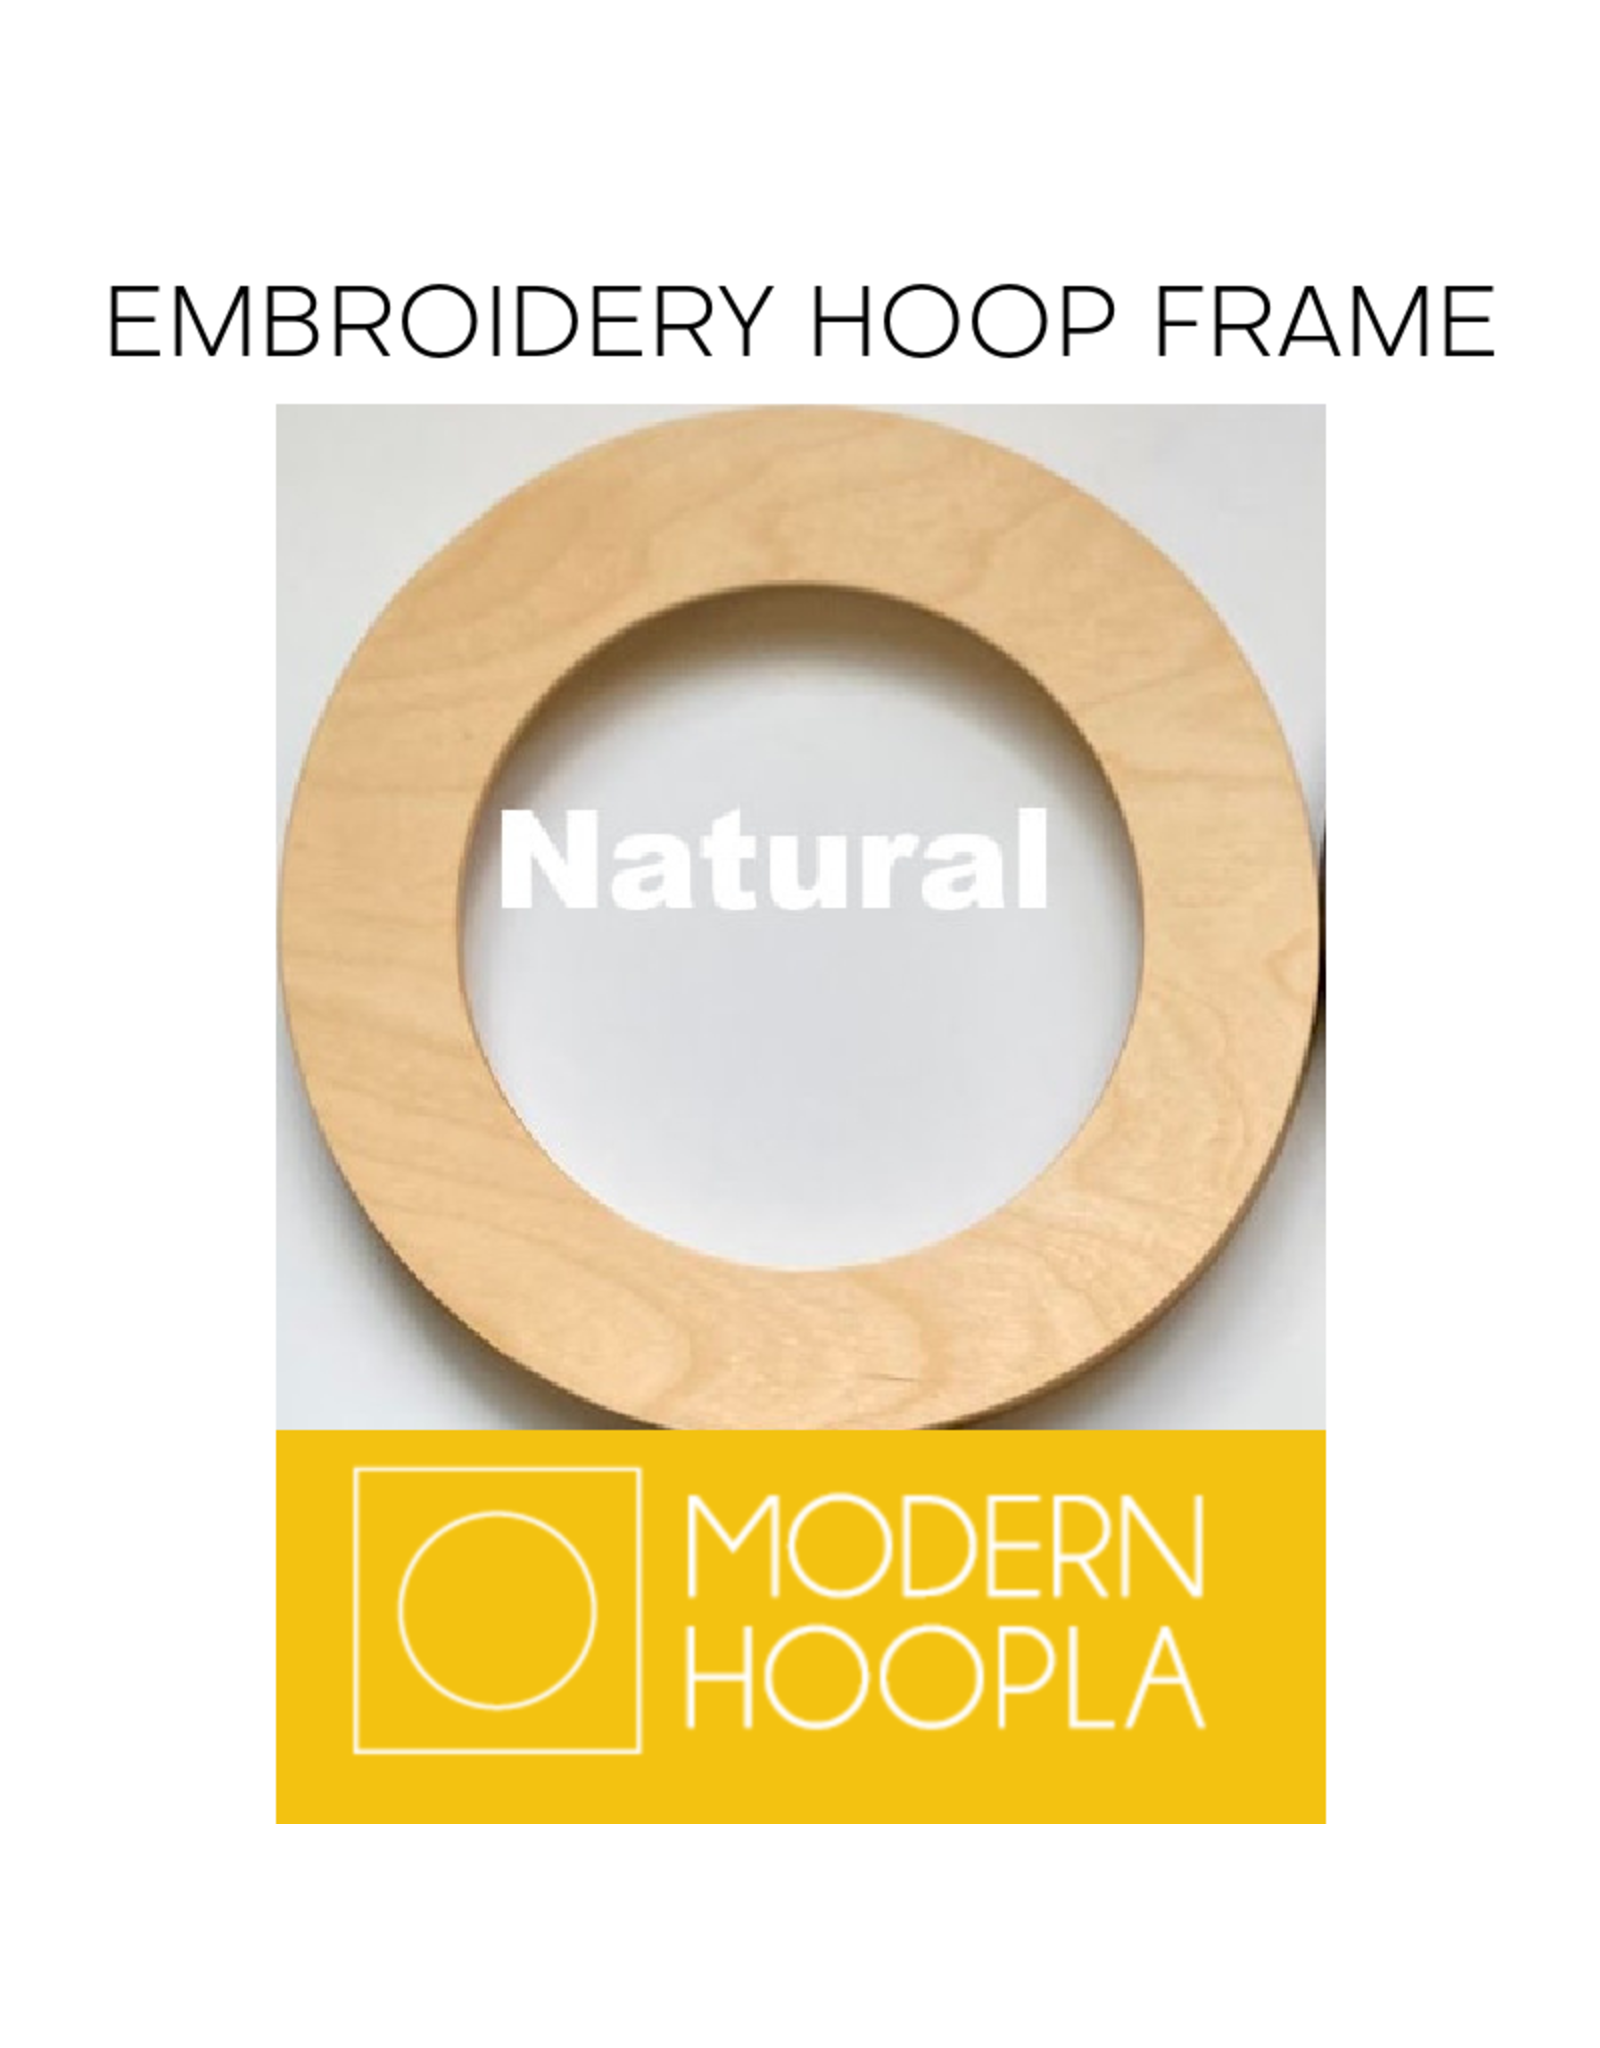 Modern Hoopla Round Hoop Frame in Natural for 6" Embroidery Hoop